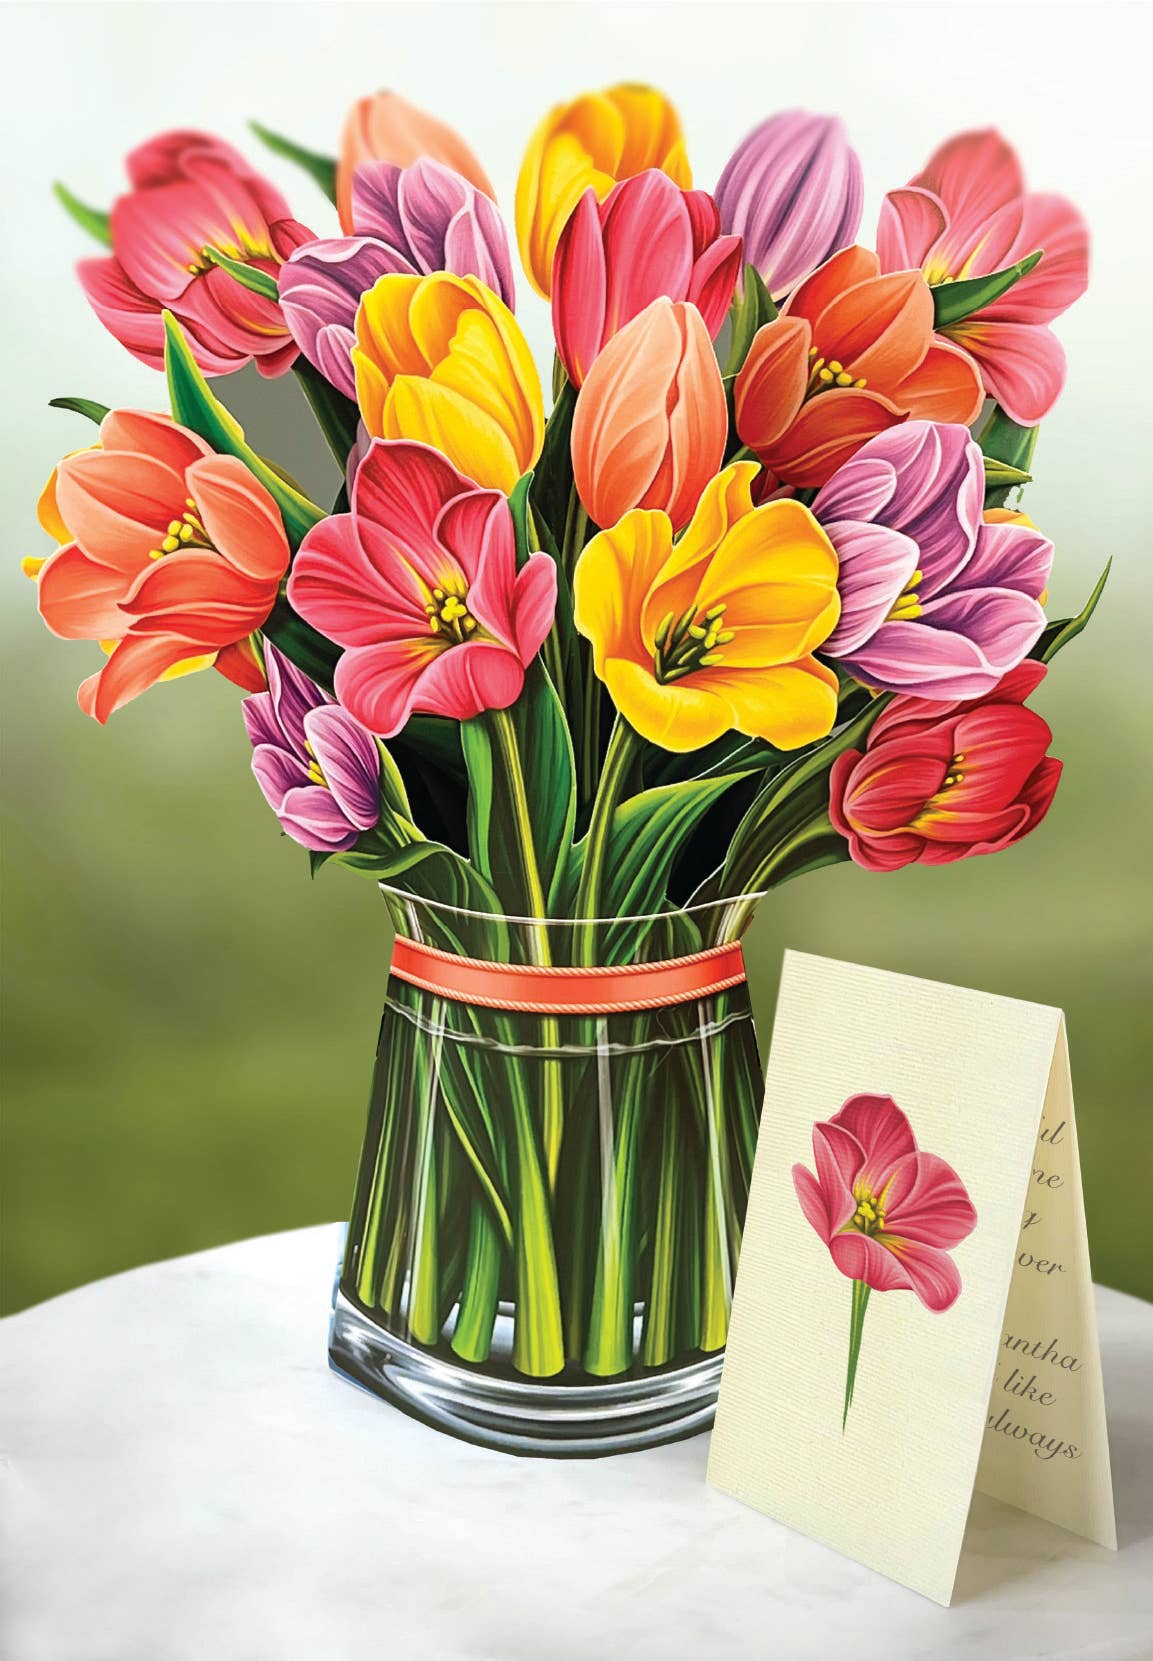 Festive Tulips Pop Up Greeting Card